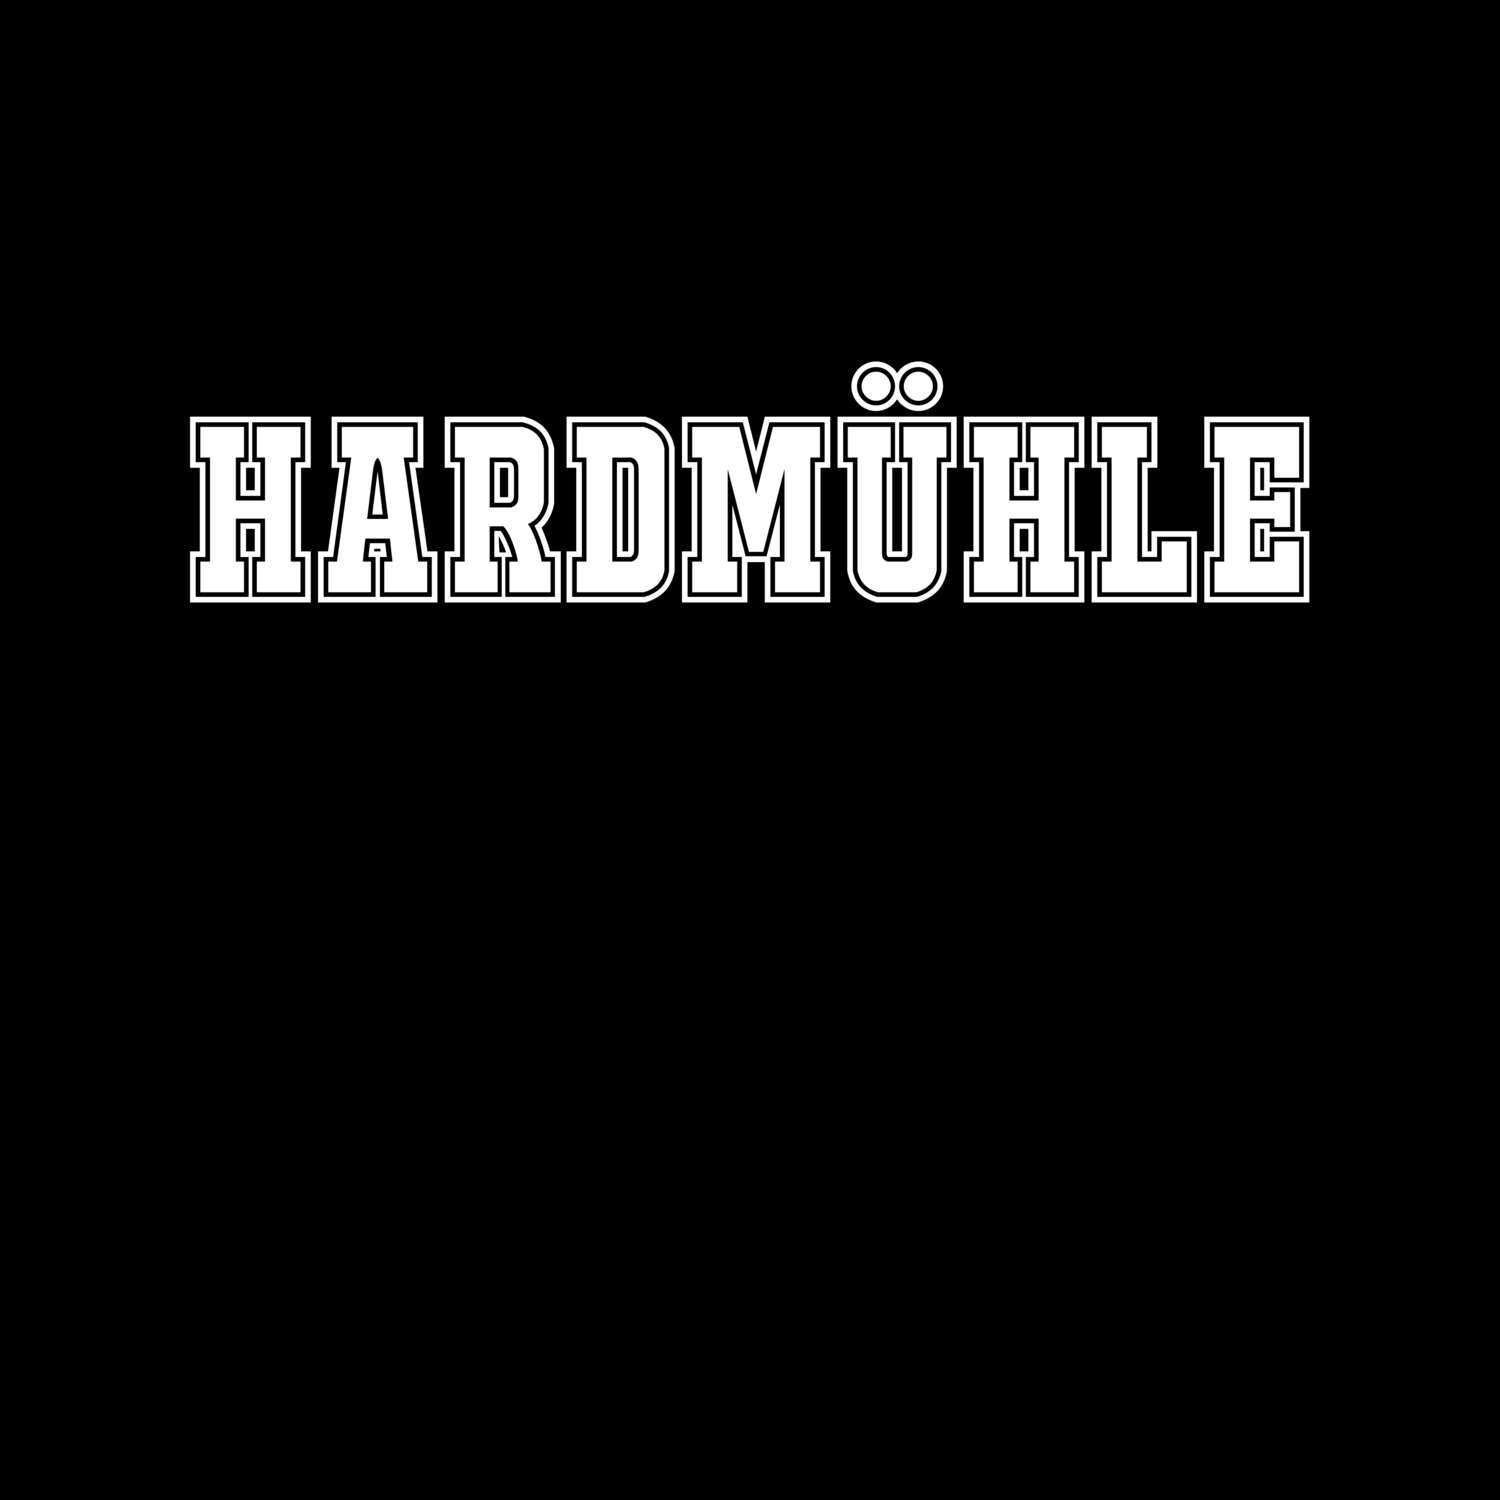 Hardmühle T-Shirt »Classic«